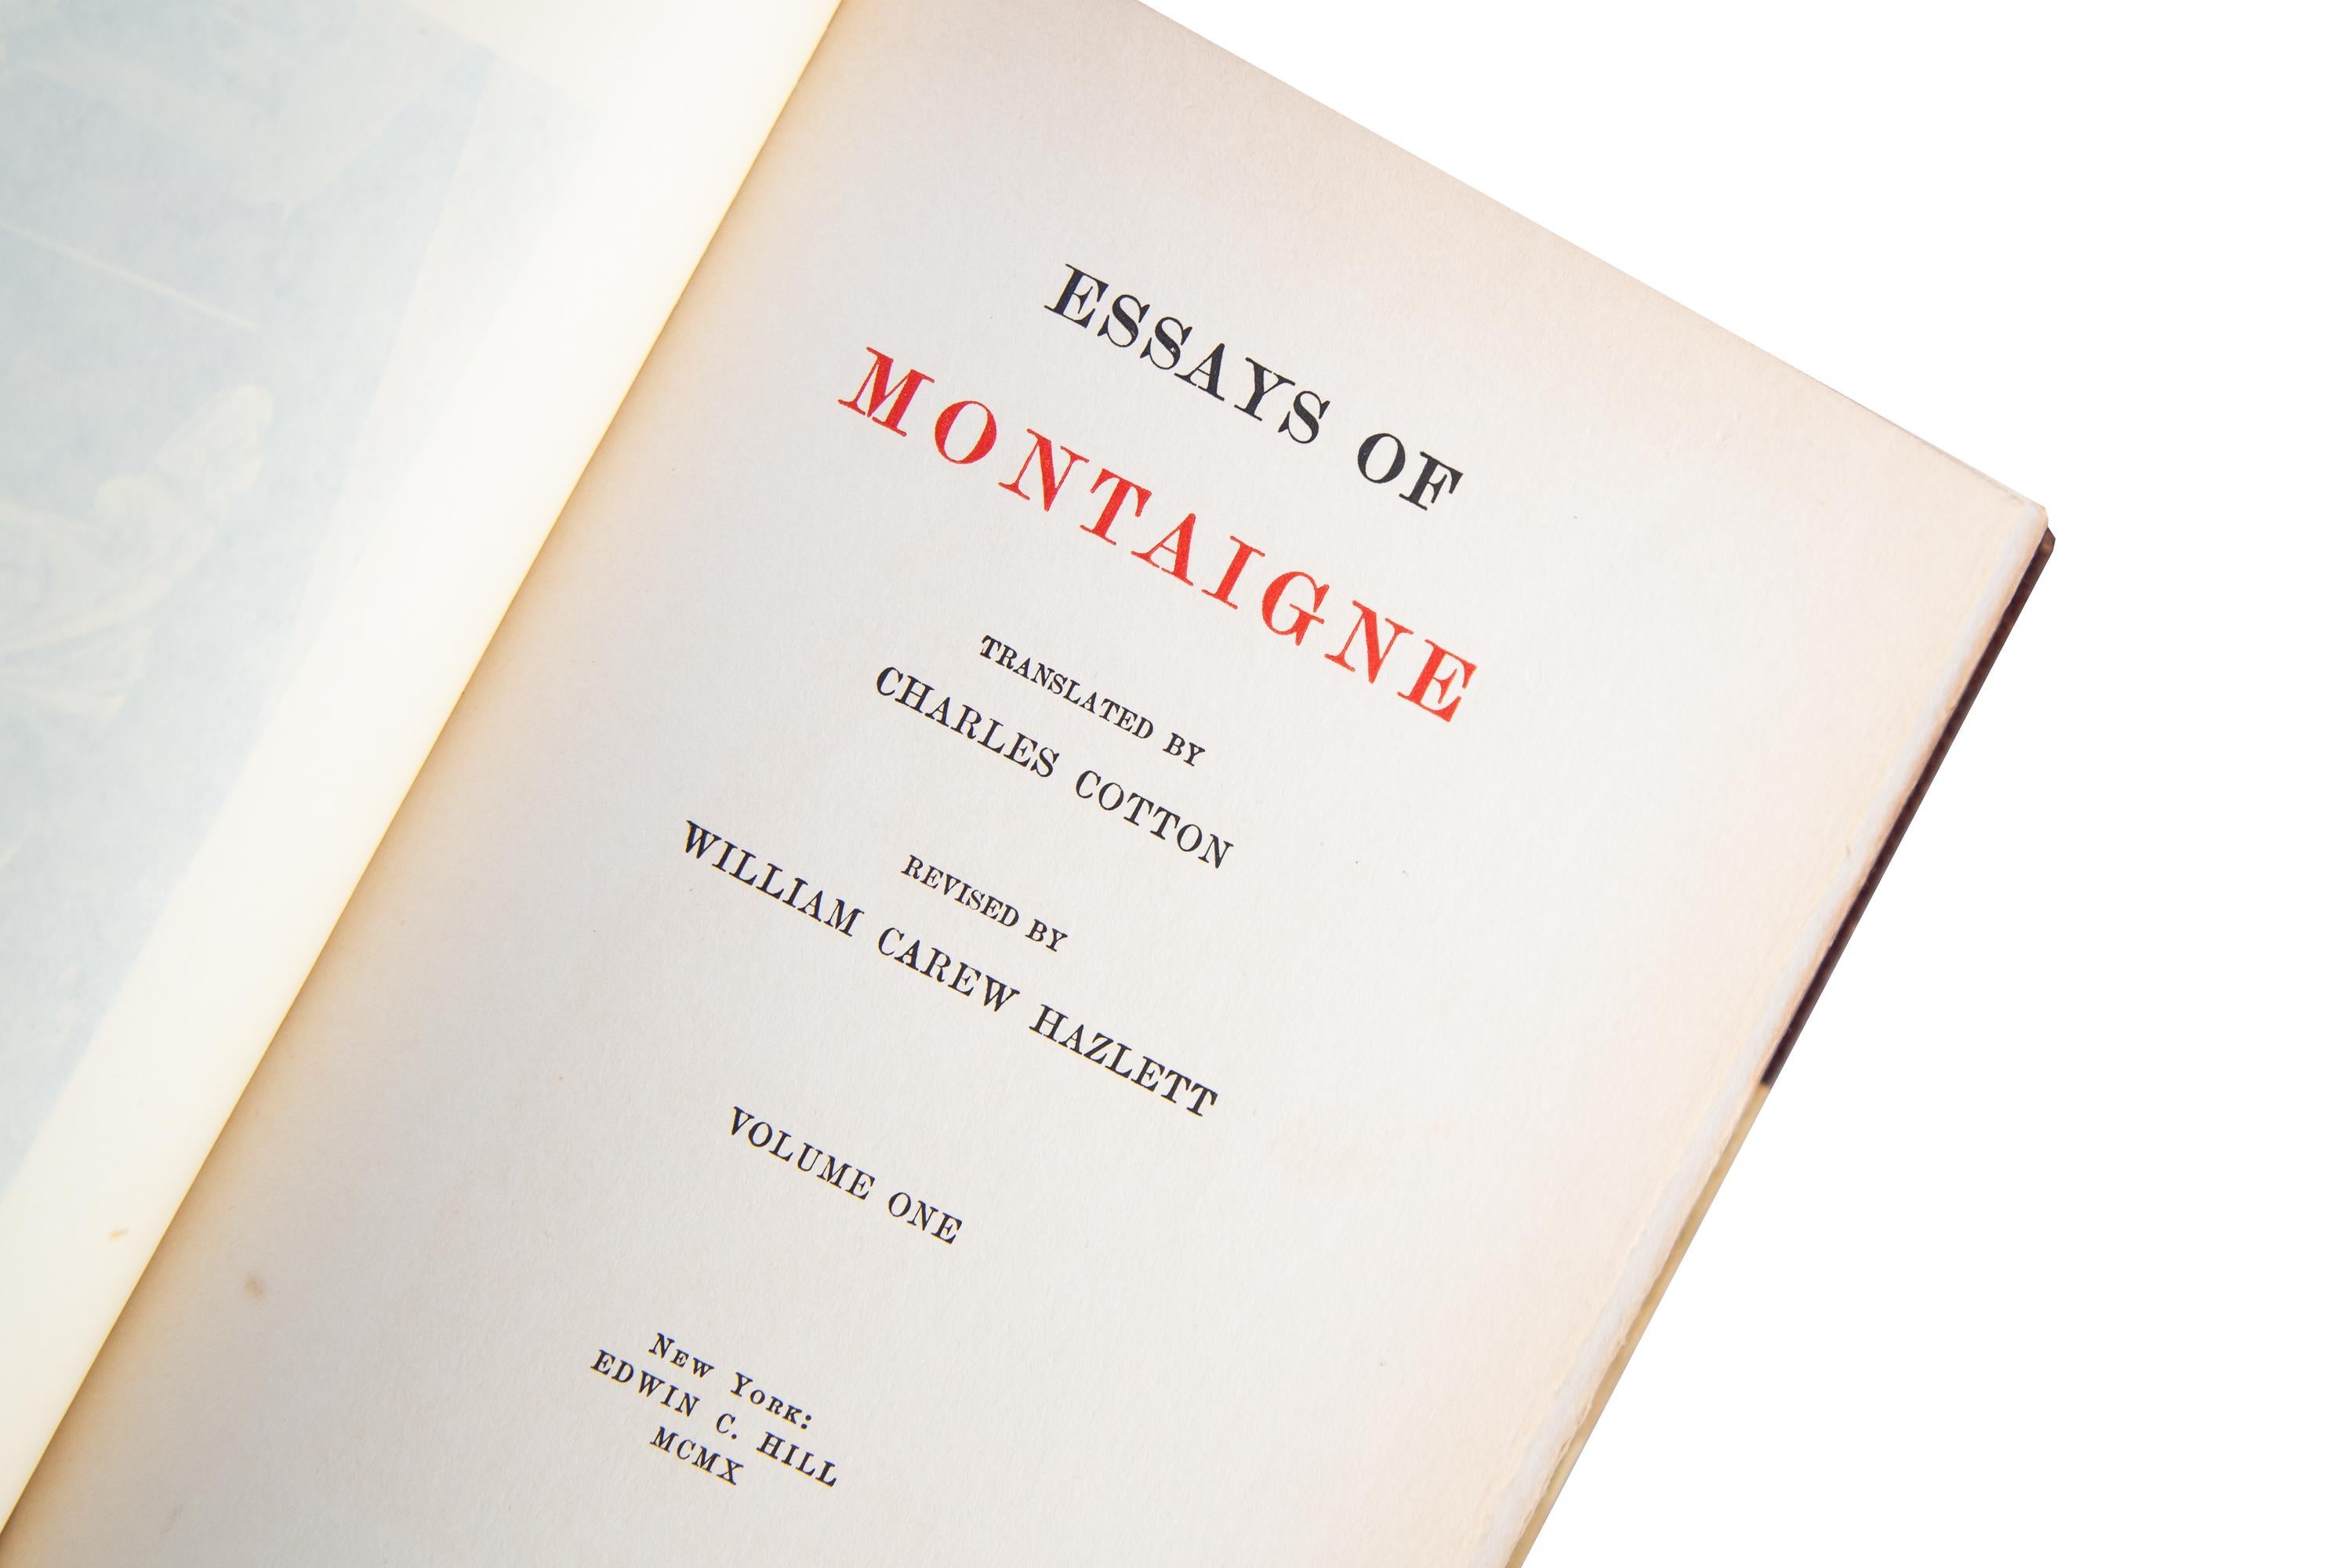 American 10 Volumes. Michel de Montaigne, The Works of Michel de Montaigne.